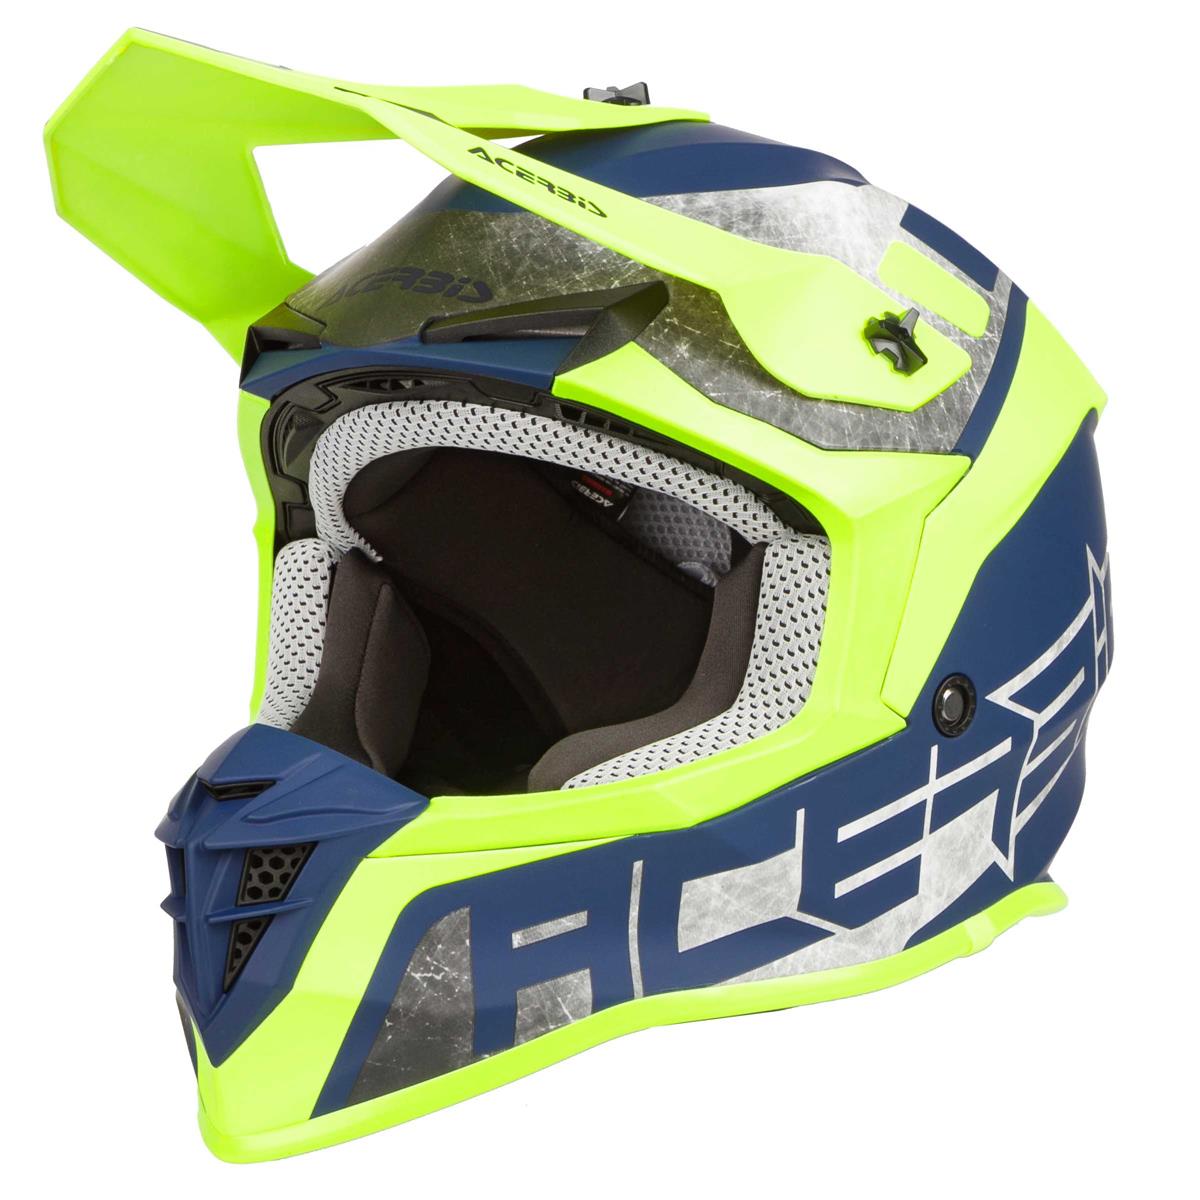 Acerbis Motocross-Helm Linear Gelb/Blau